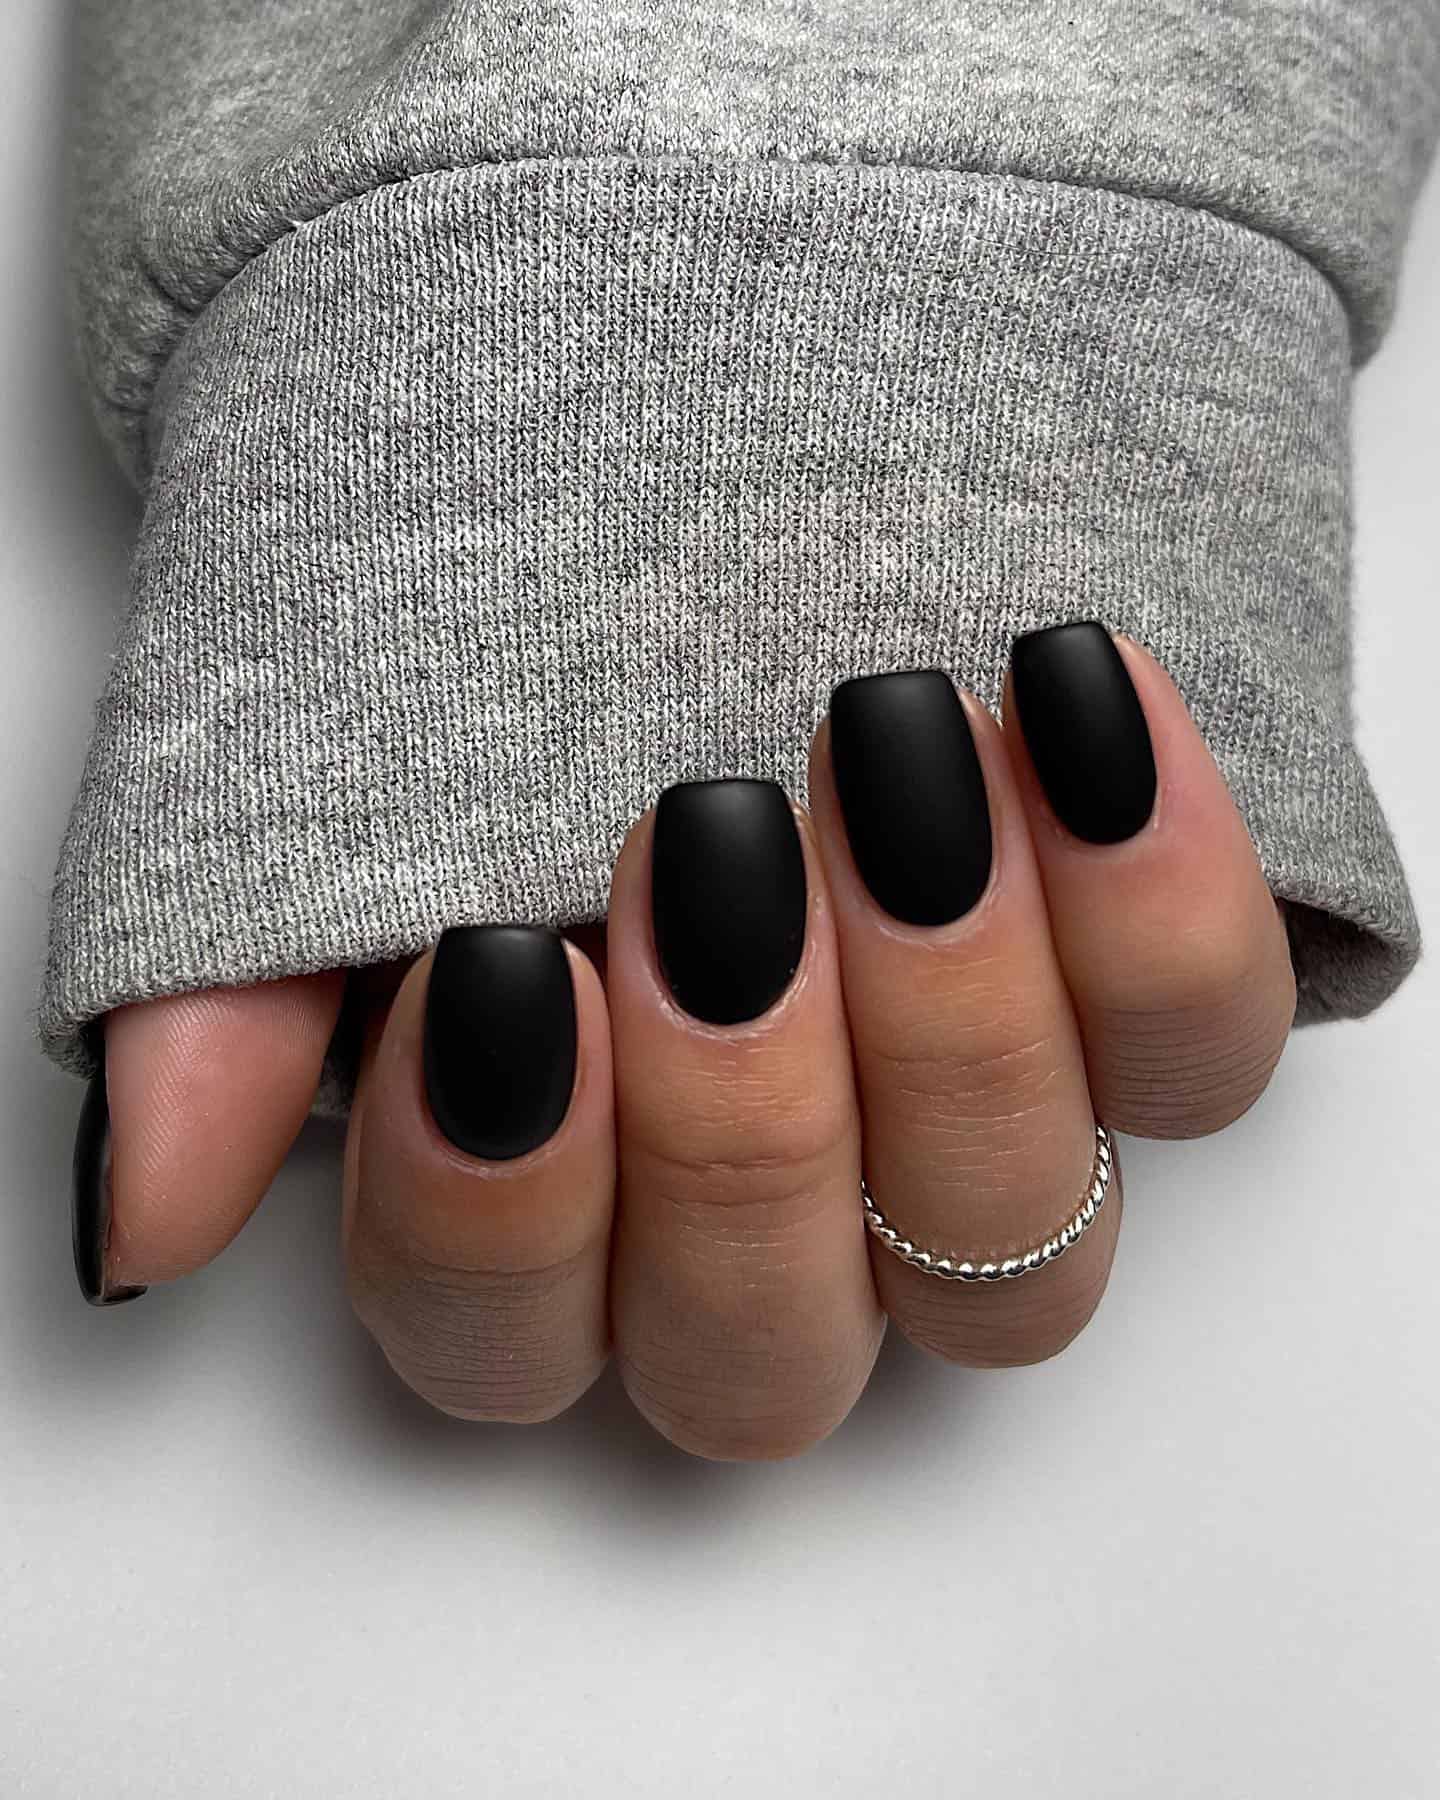 Short square nails with matte black polish